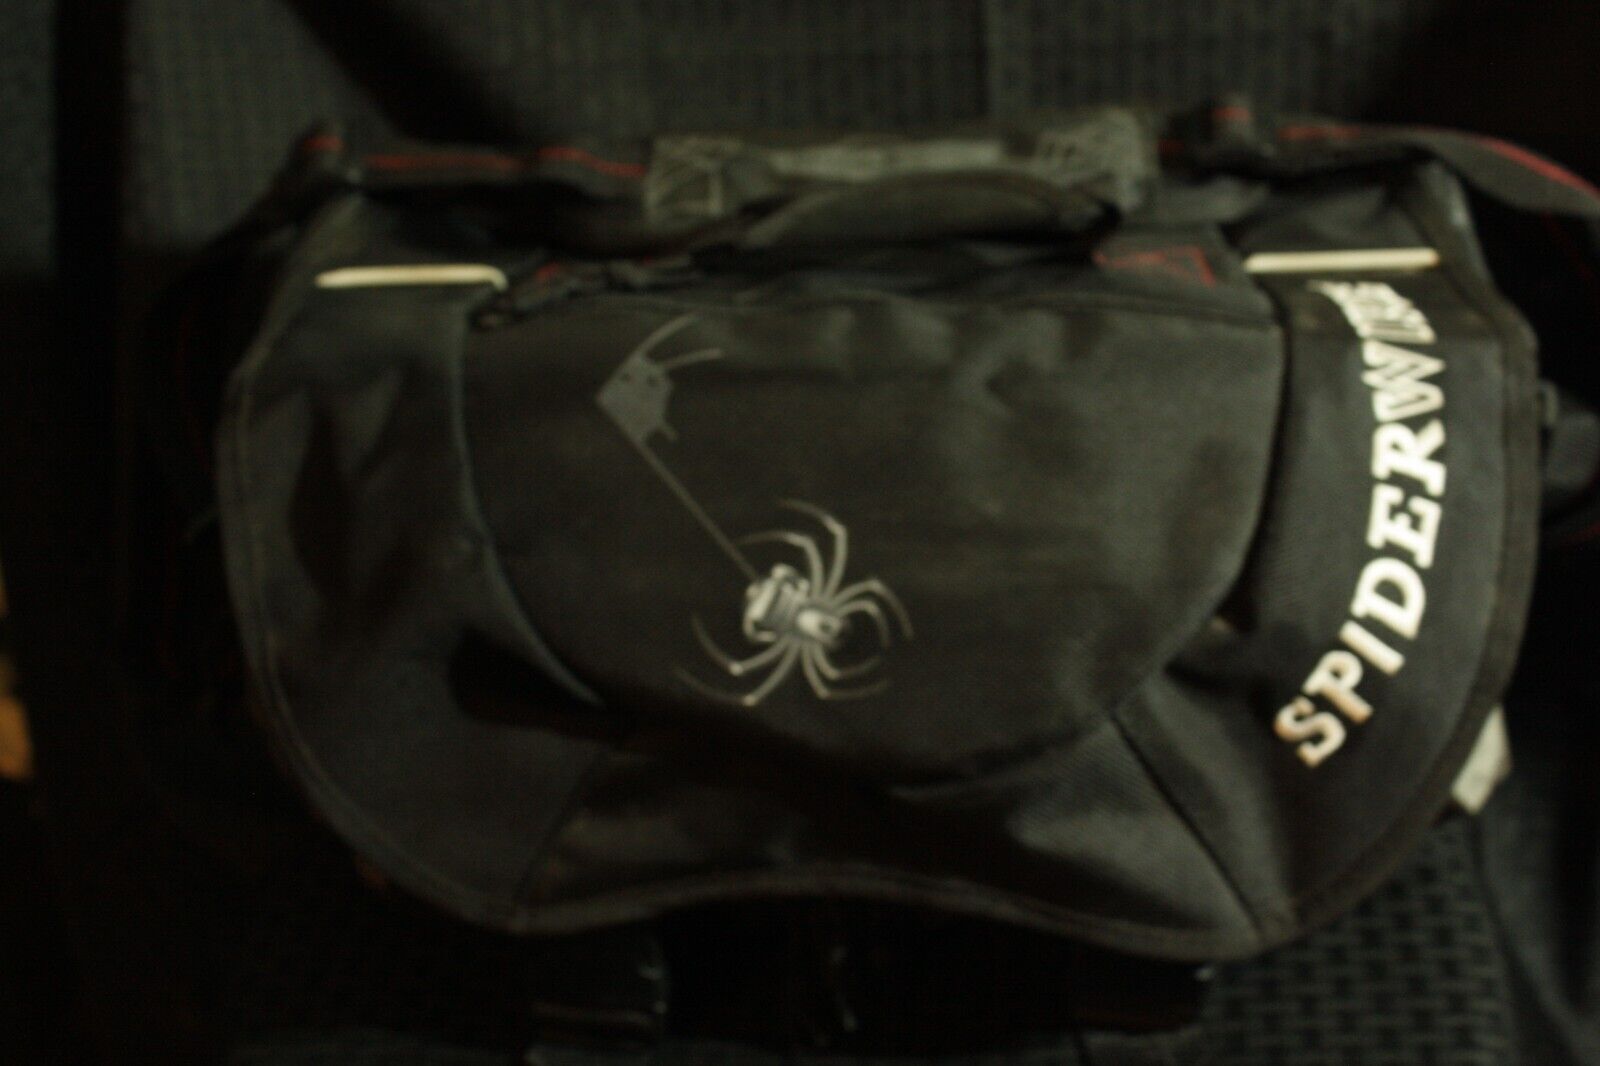 Spiderwire Orb Spider Fishing Tackle Bag 15.7-Liter Black | eBay